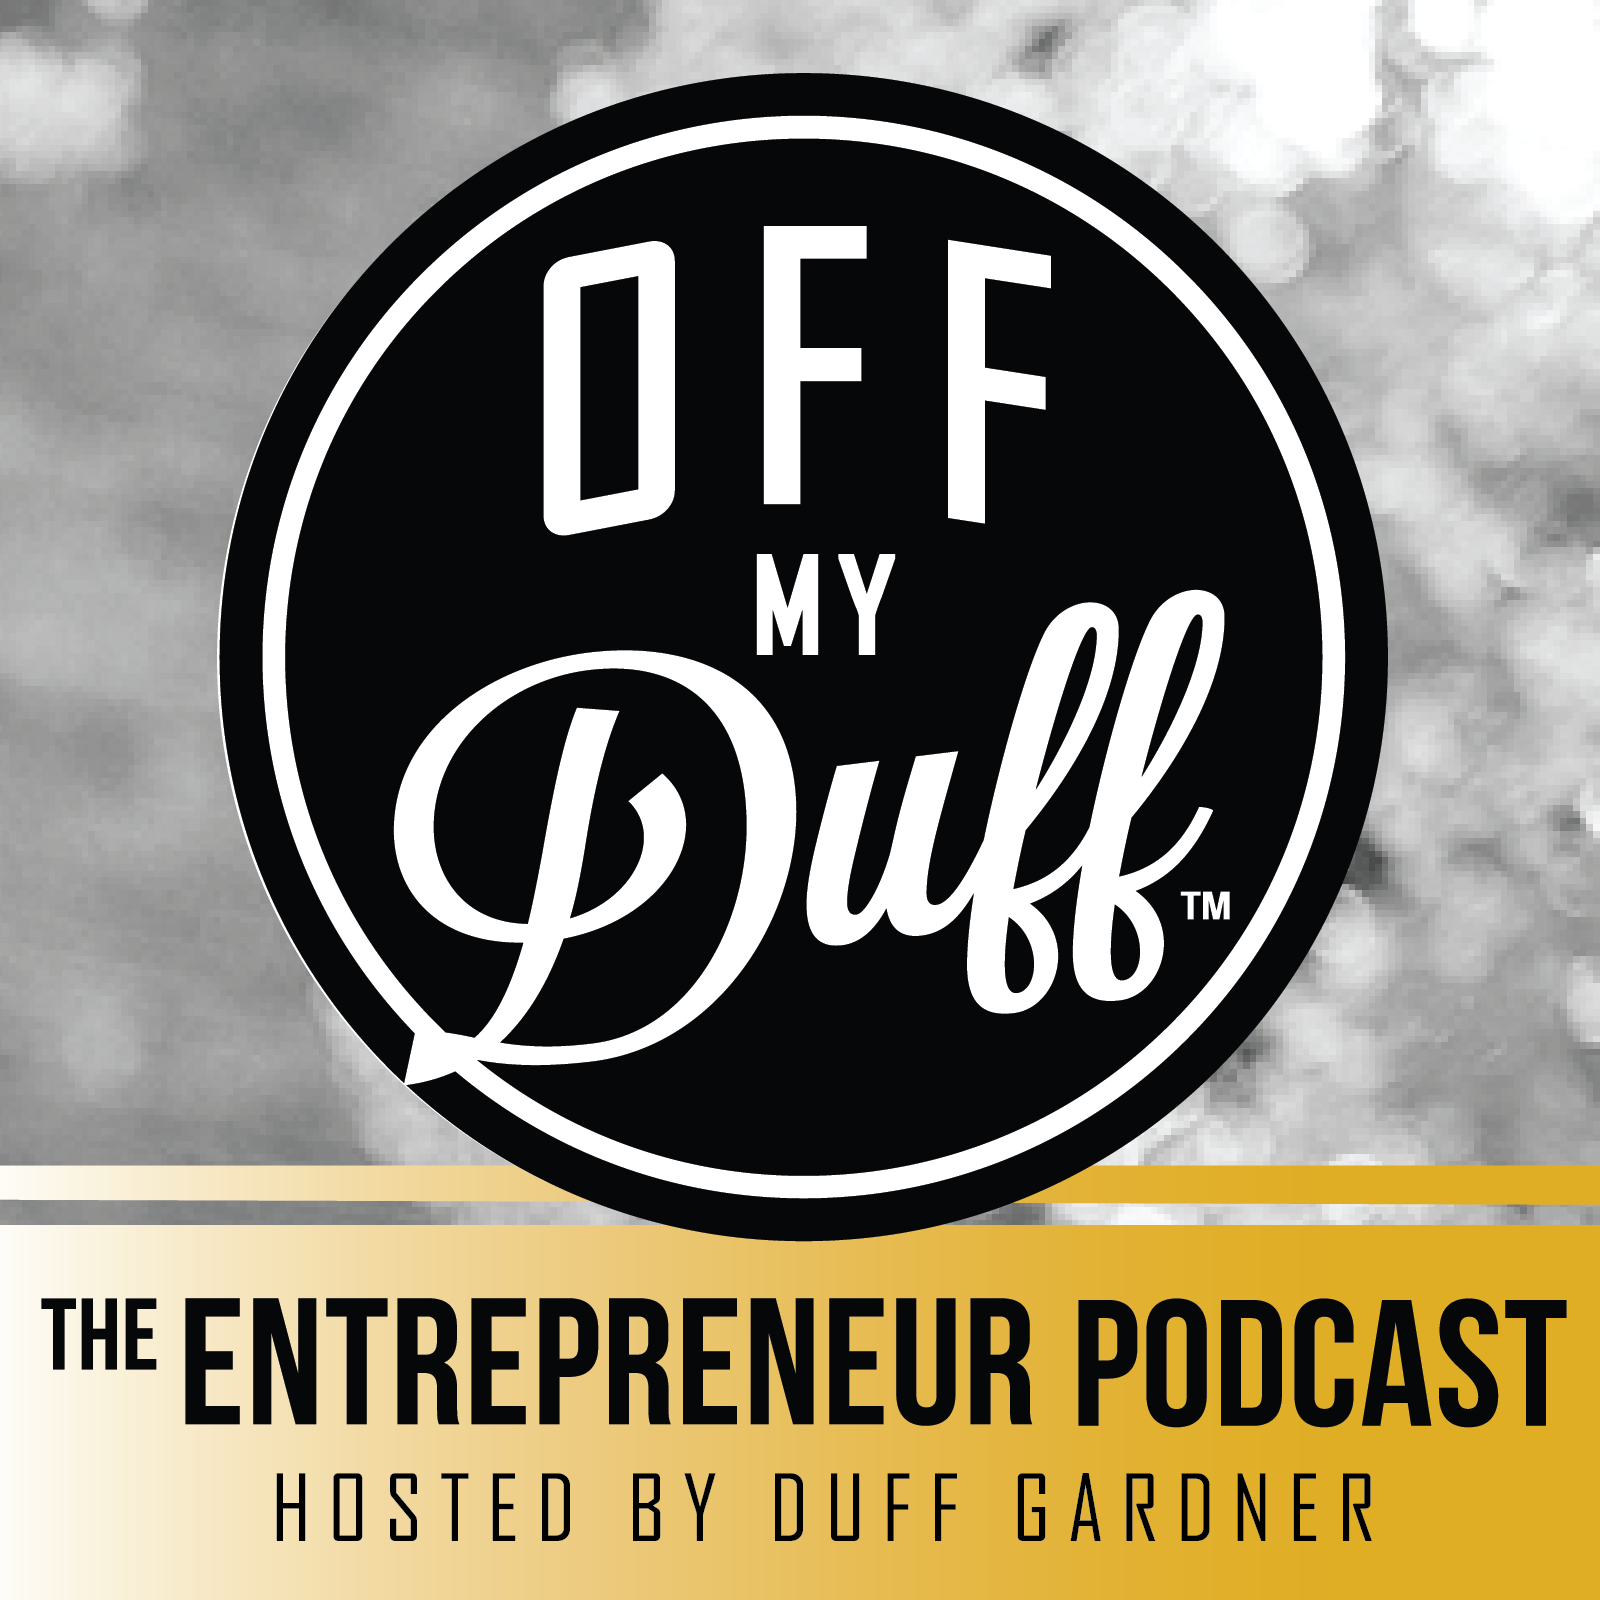 The Invincible Entrepreneur Podcast